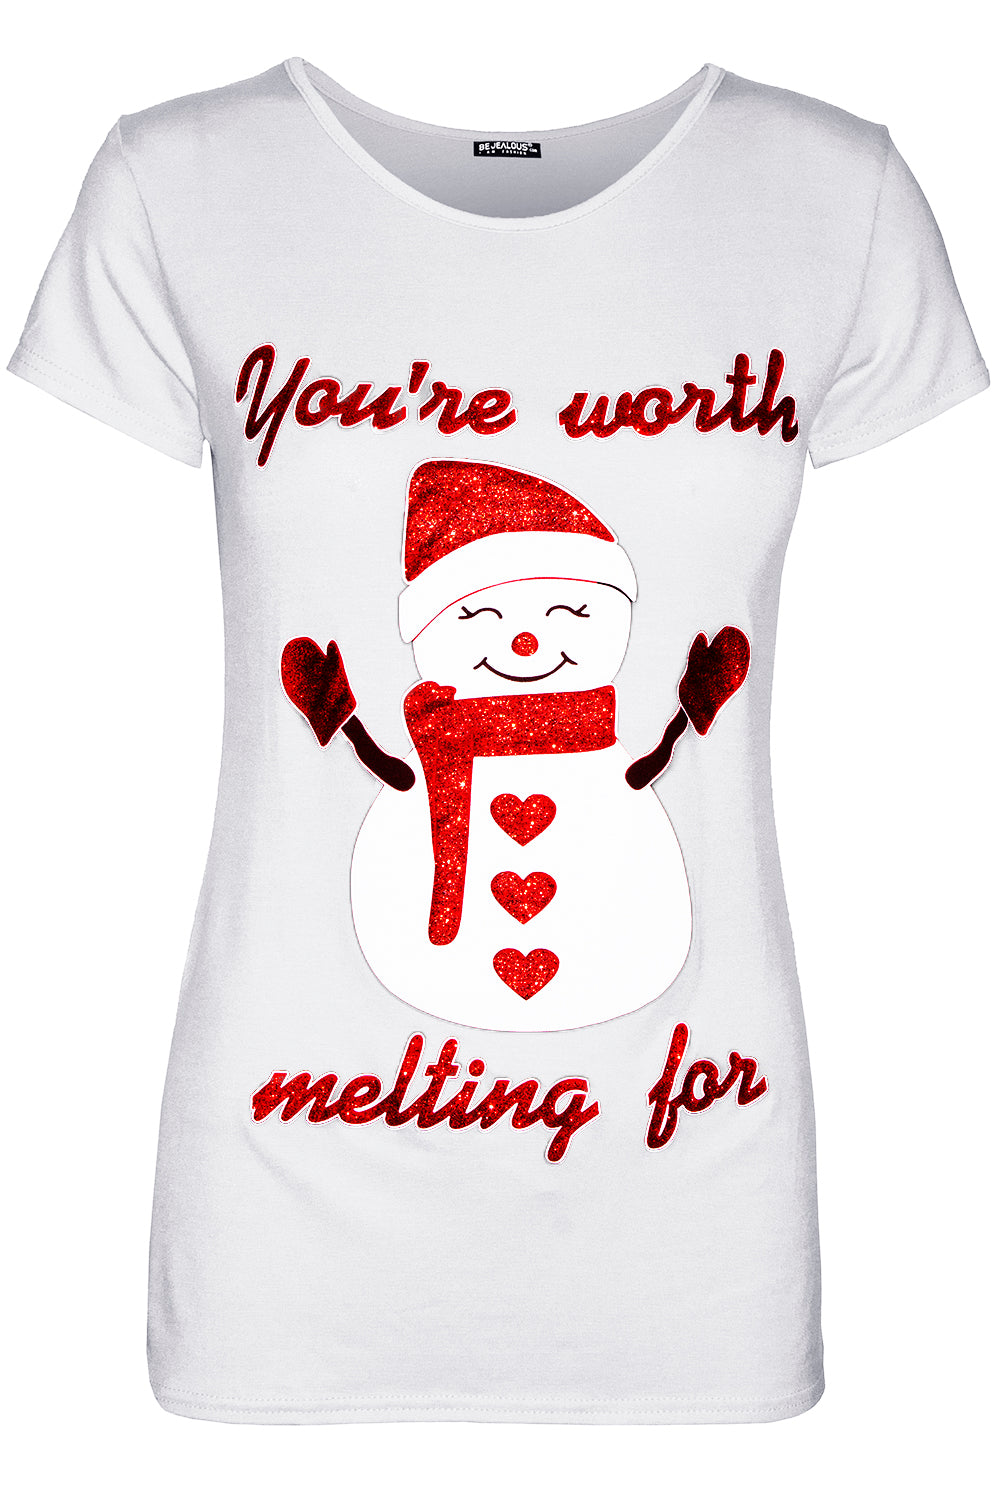 Maisie Christmas Xmas Cap Sleeve T Shirt Tee Top